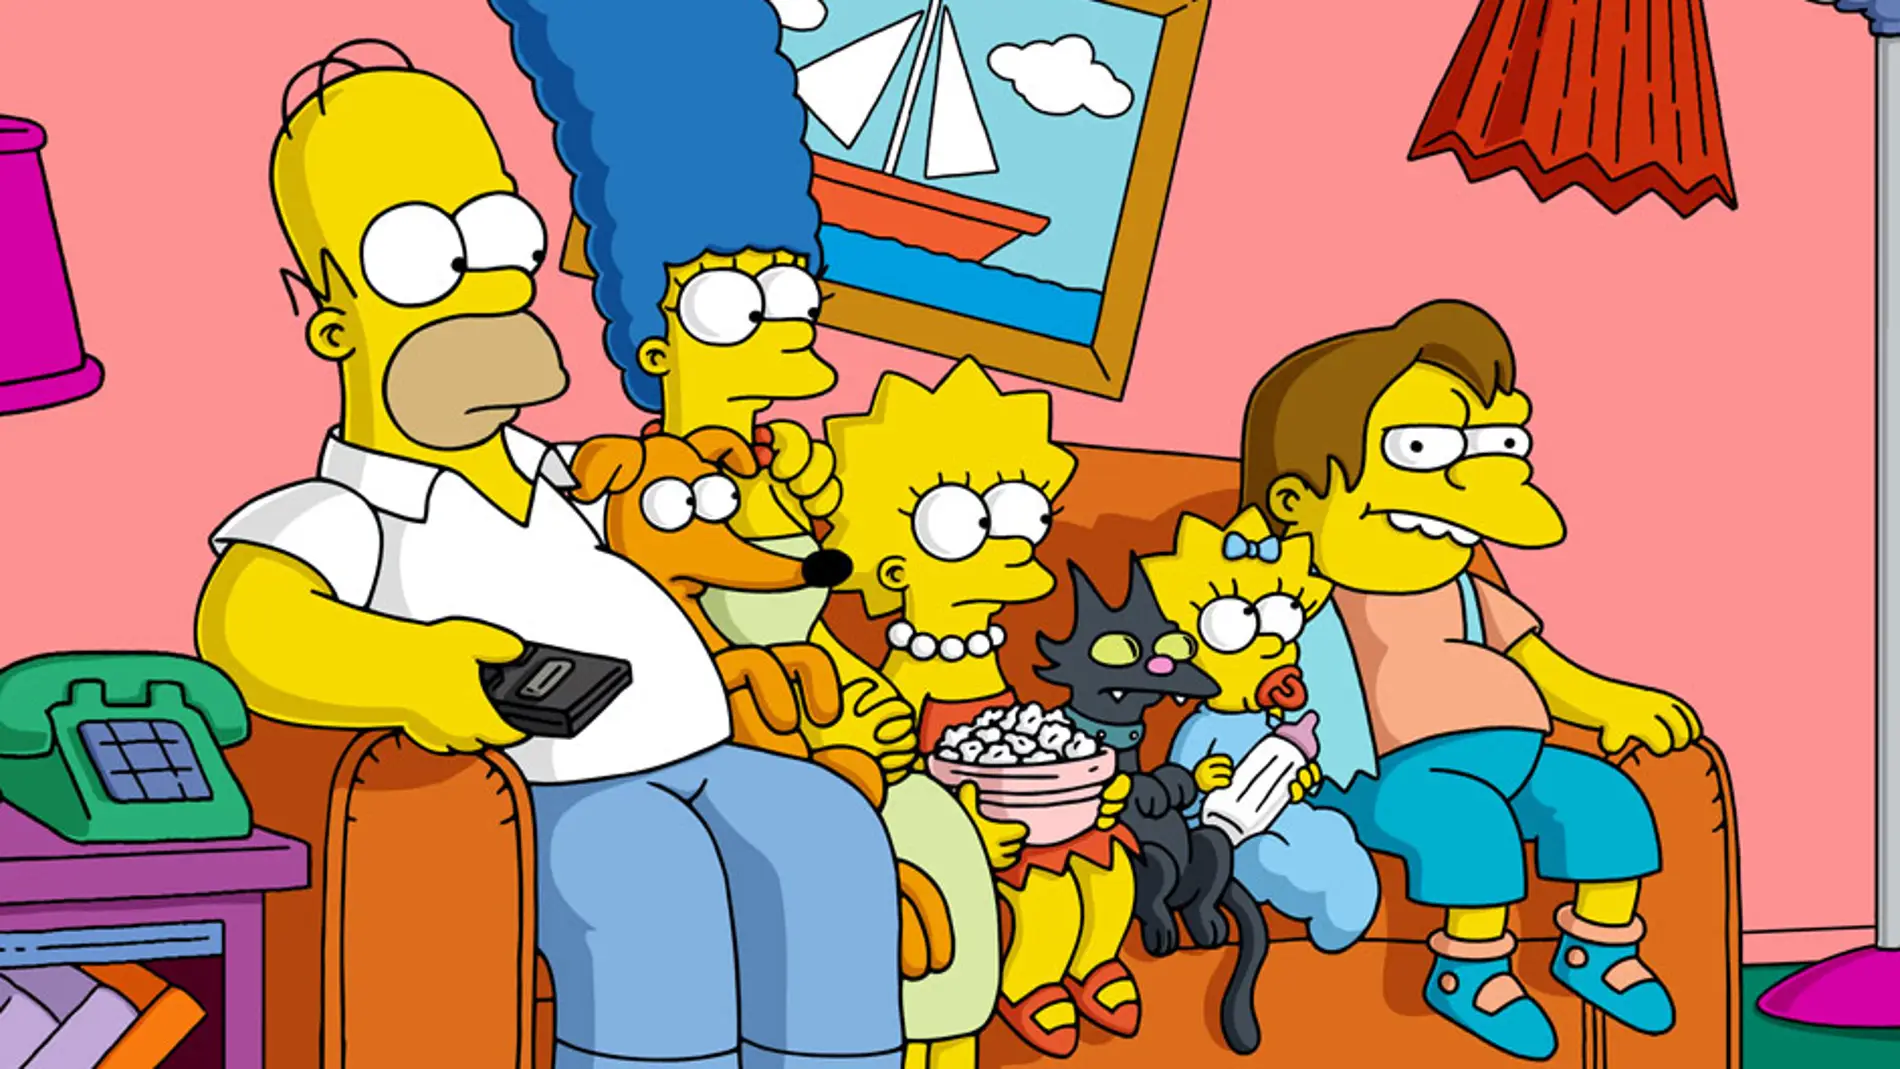 La familia Simpson en el sofá